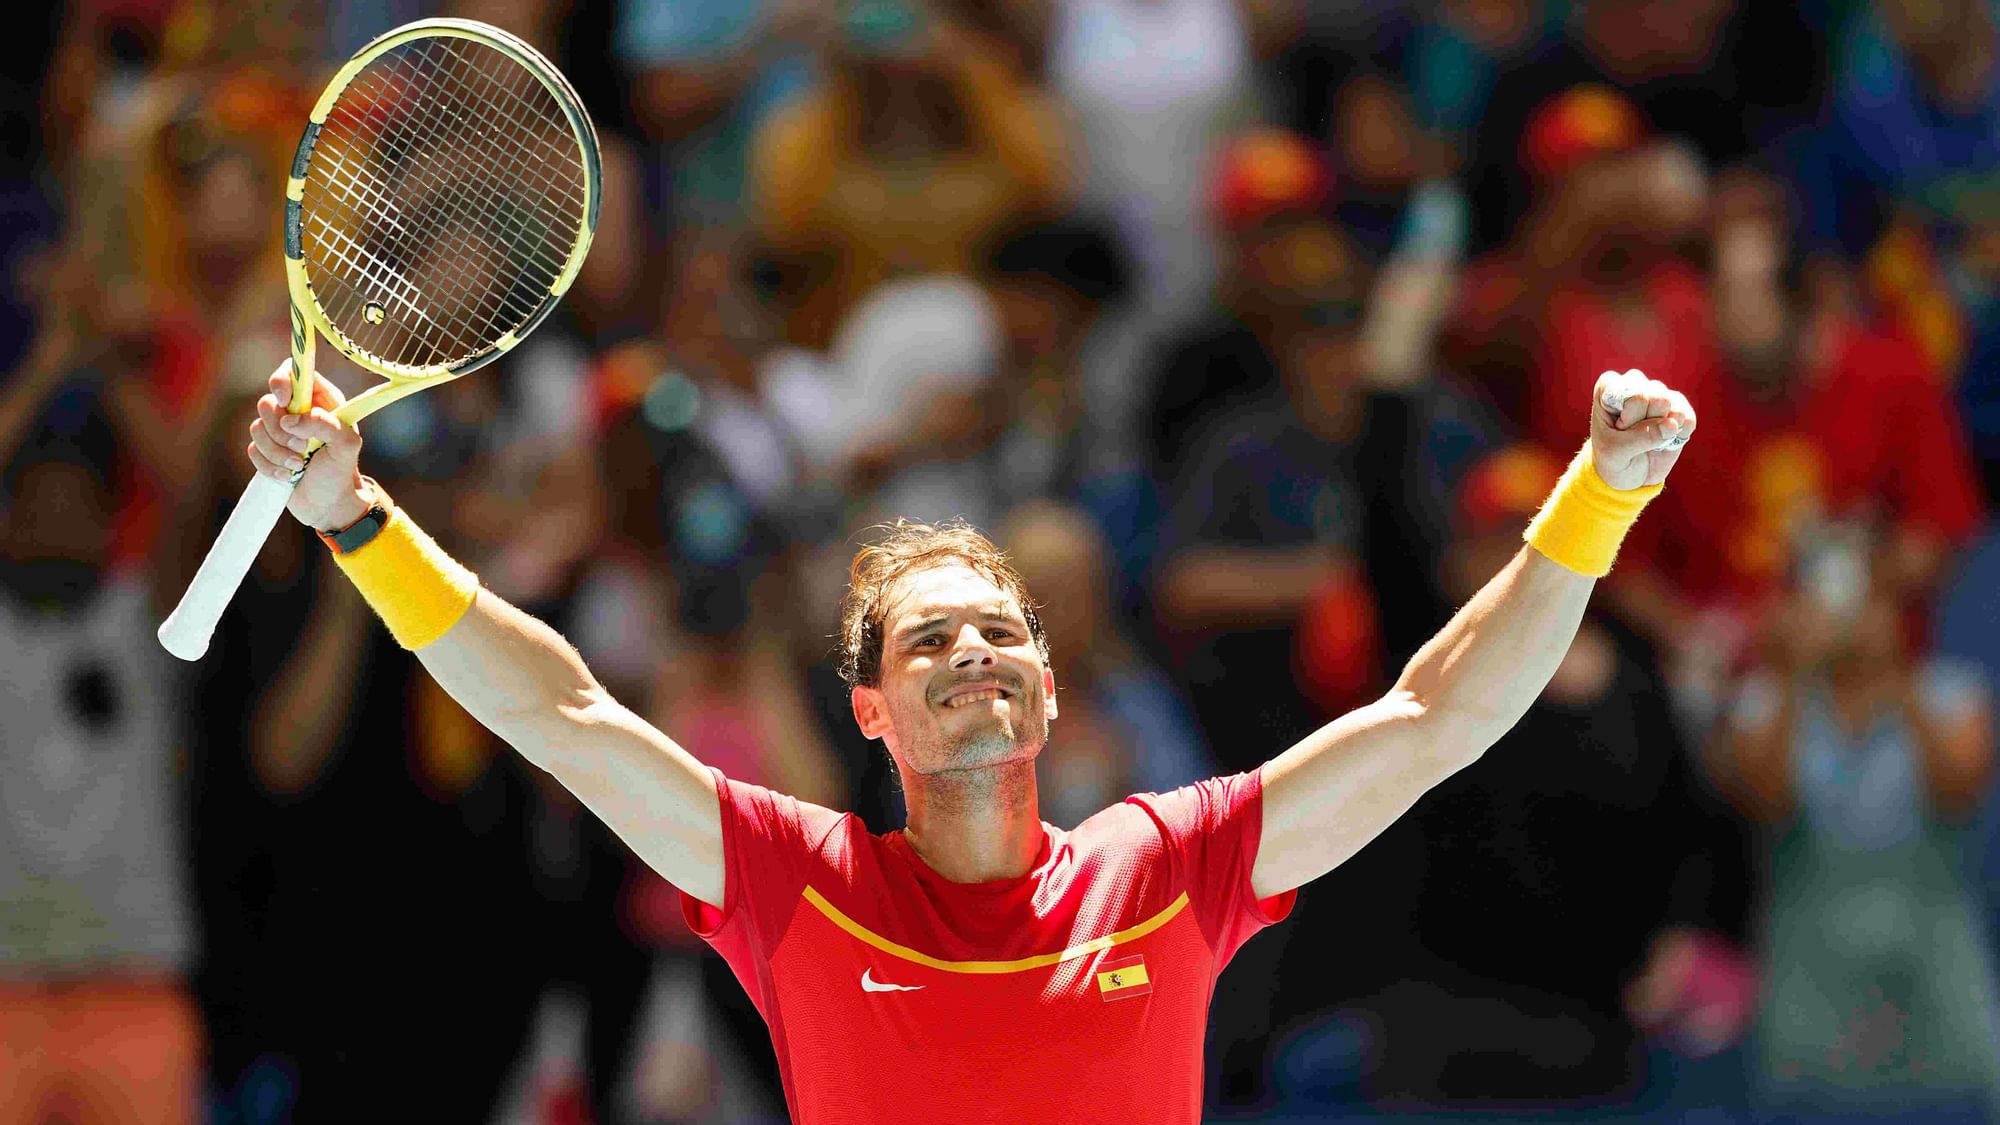 Rafael Nadal had won the Australian Open in 2009.